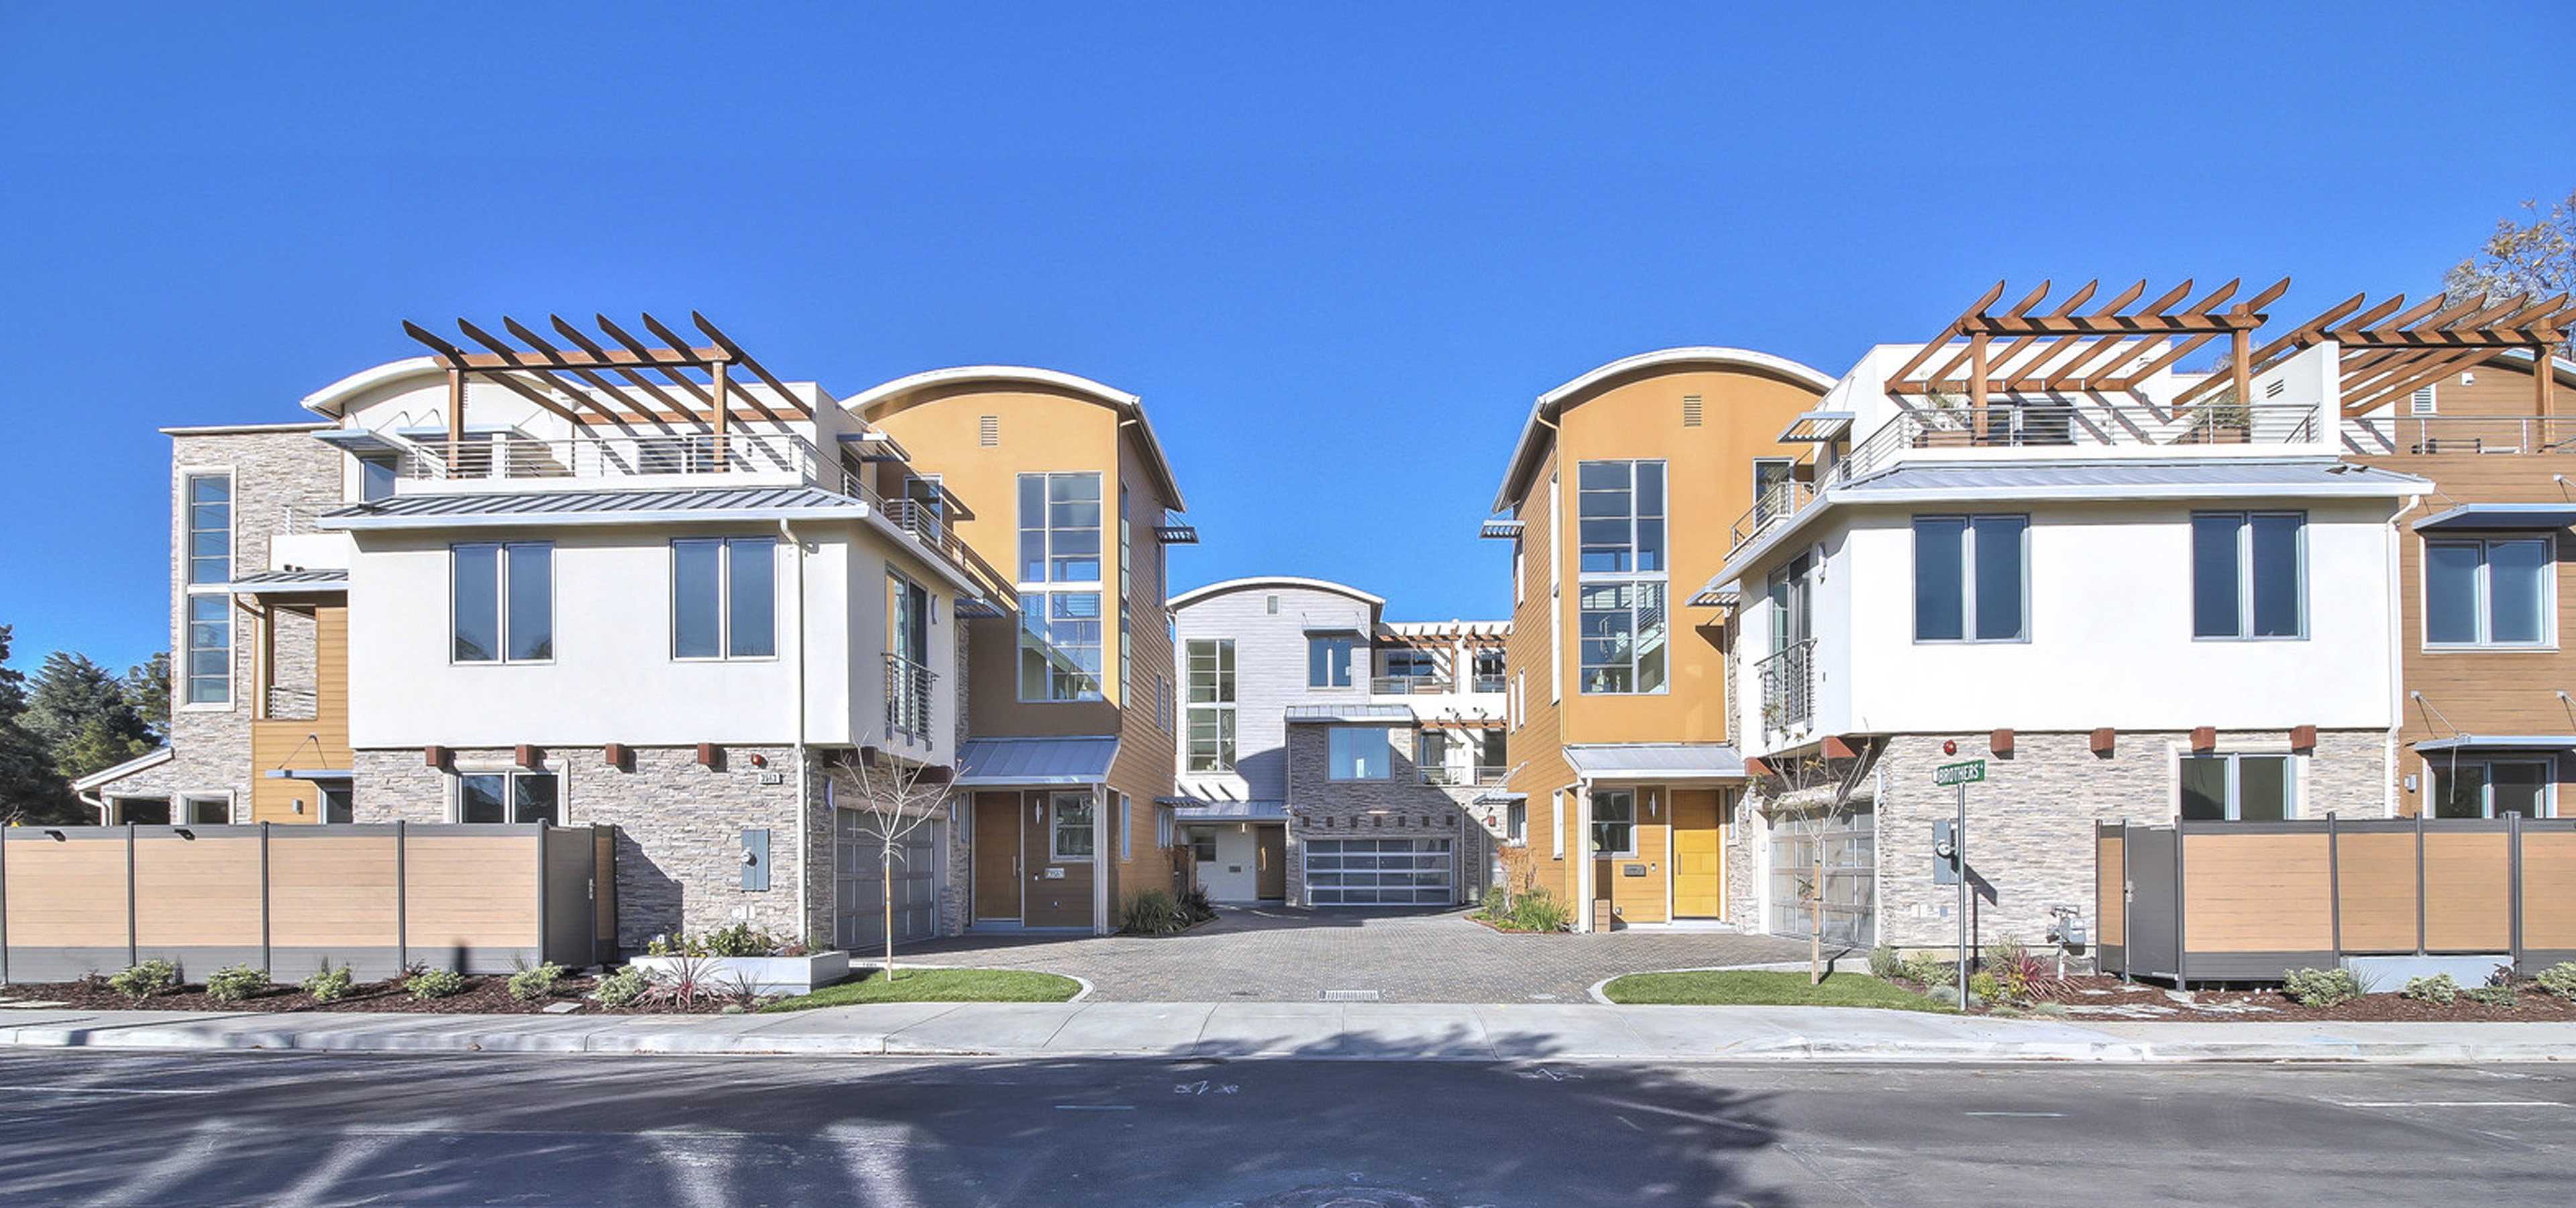 Modern Townhomes - Santa Clara, California